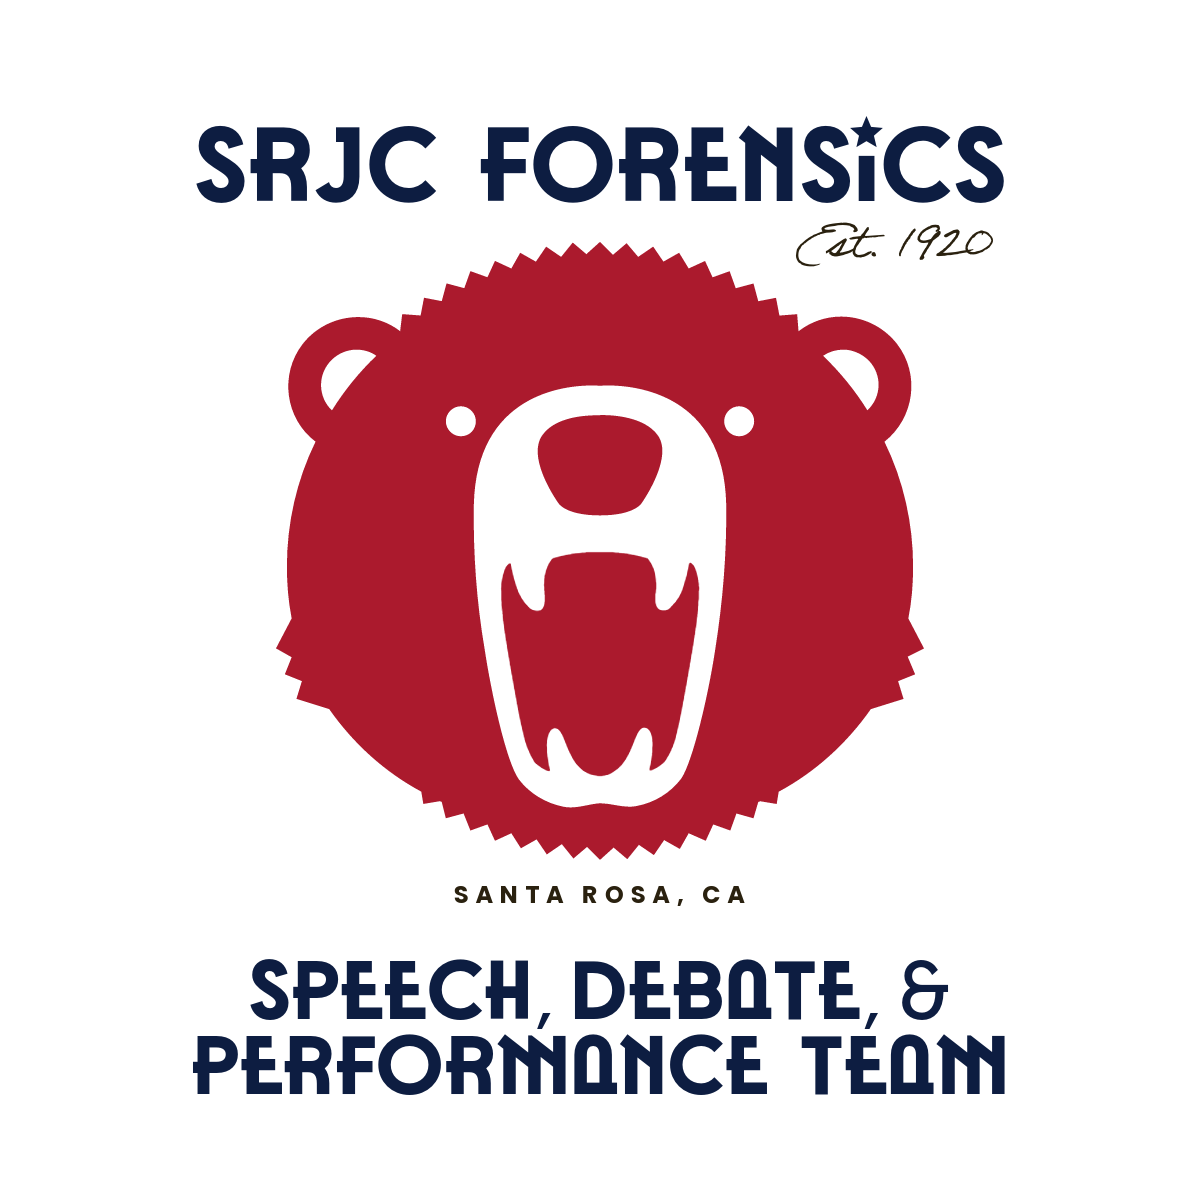 CLUB LOGO SRJC Forensics Speech, Debate, and Performance Team